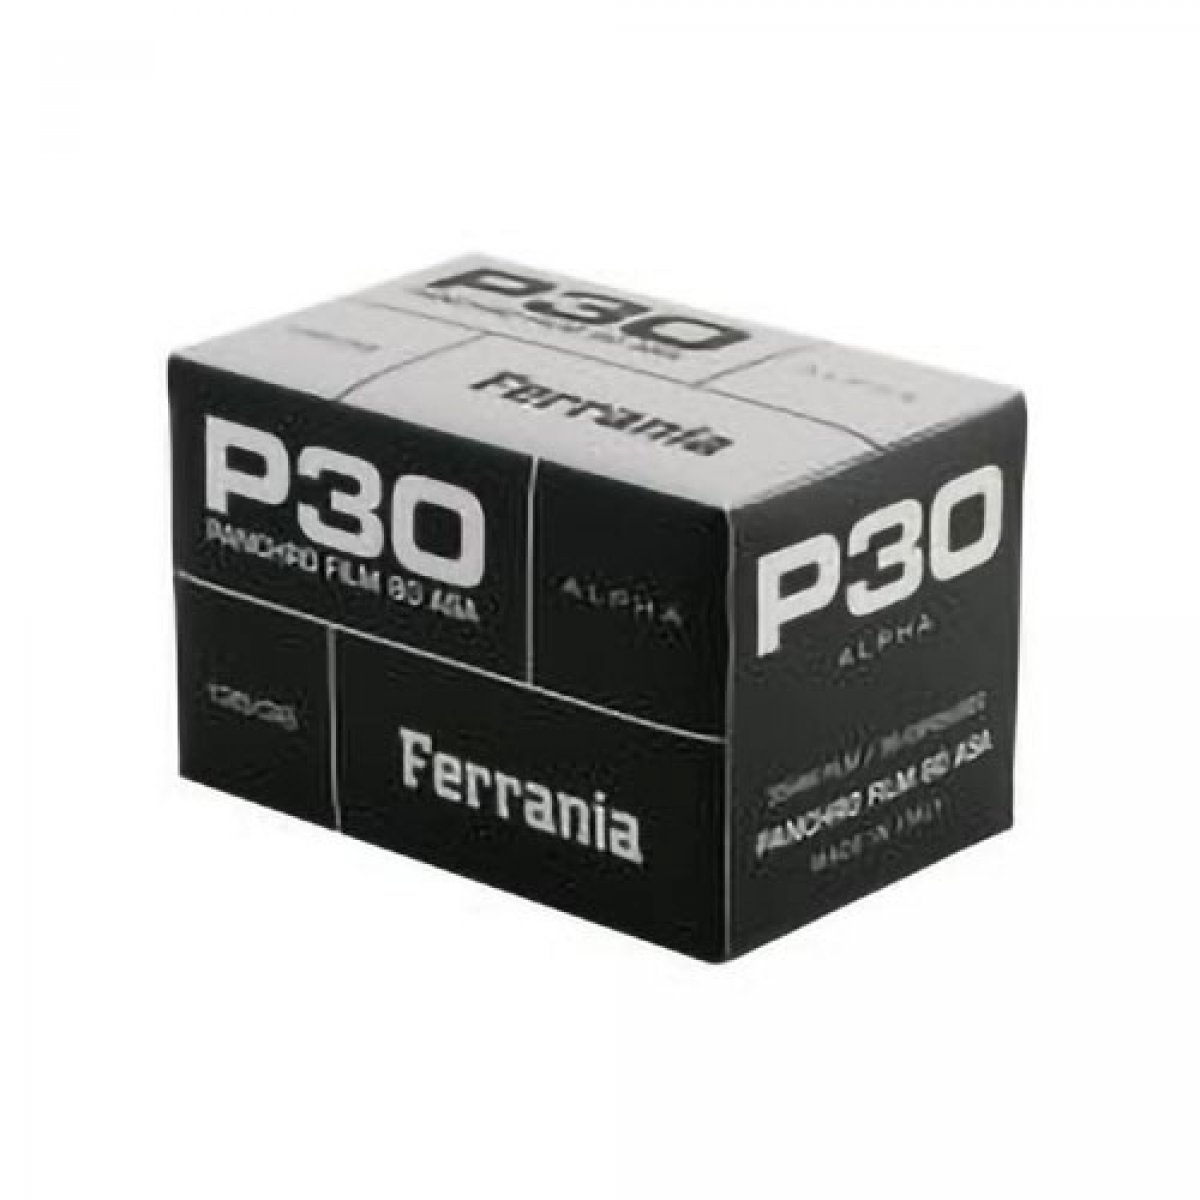 Ferrania P30 BW 80 135-36 Pellicola bianco/nero